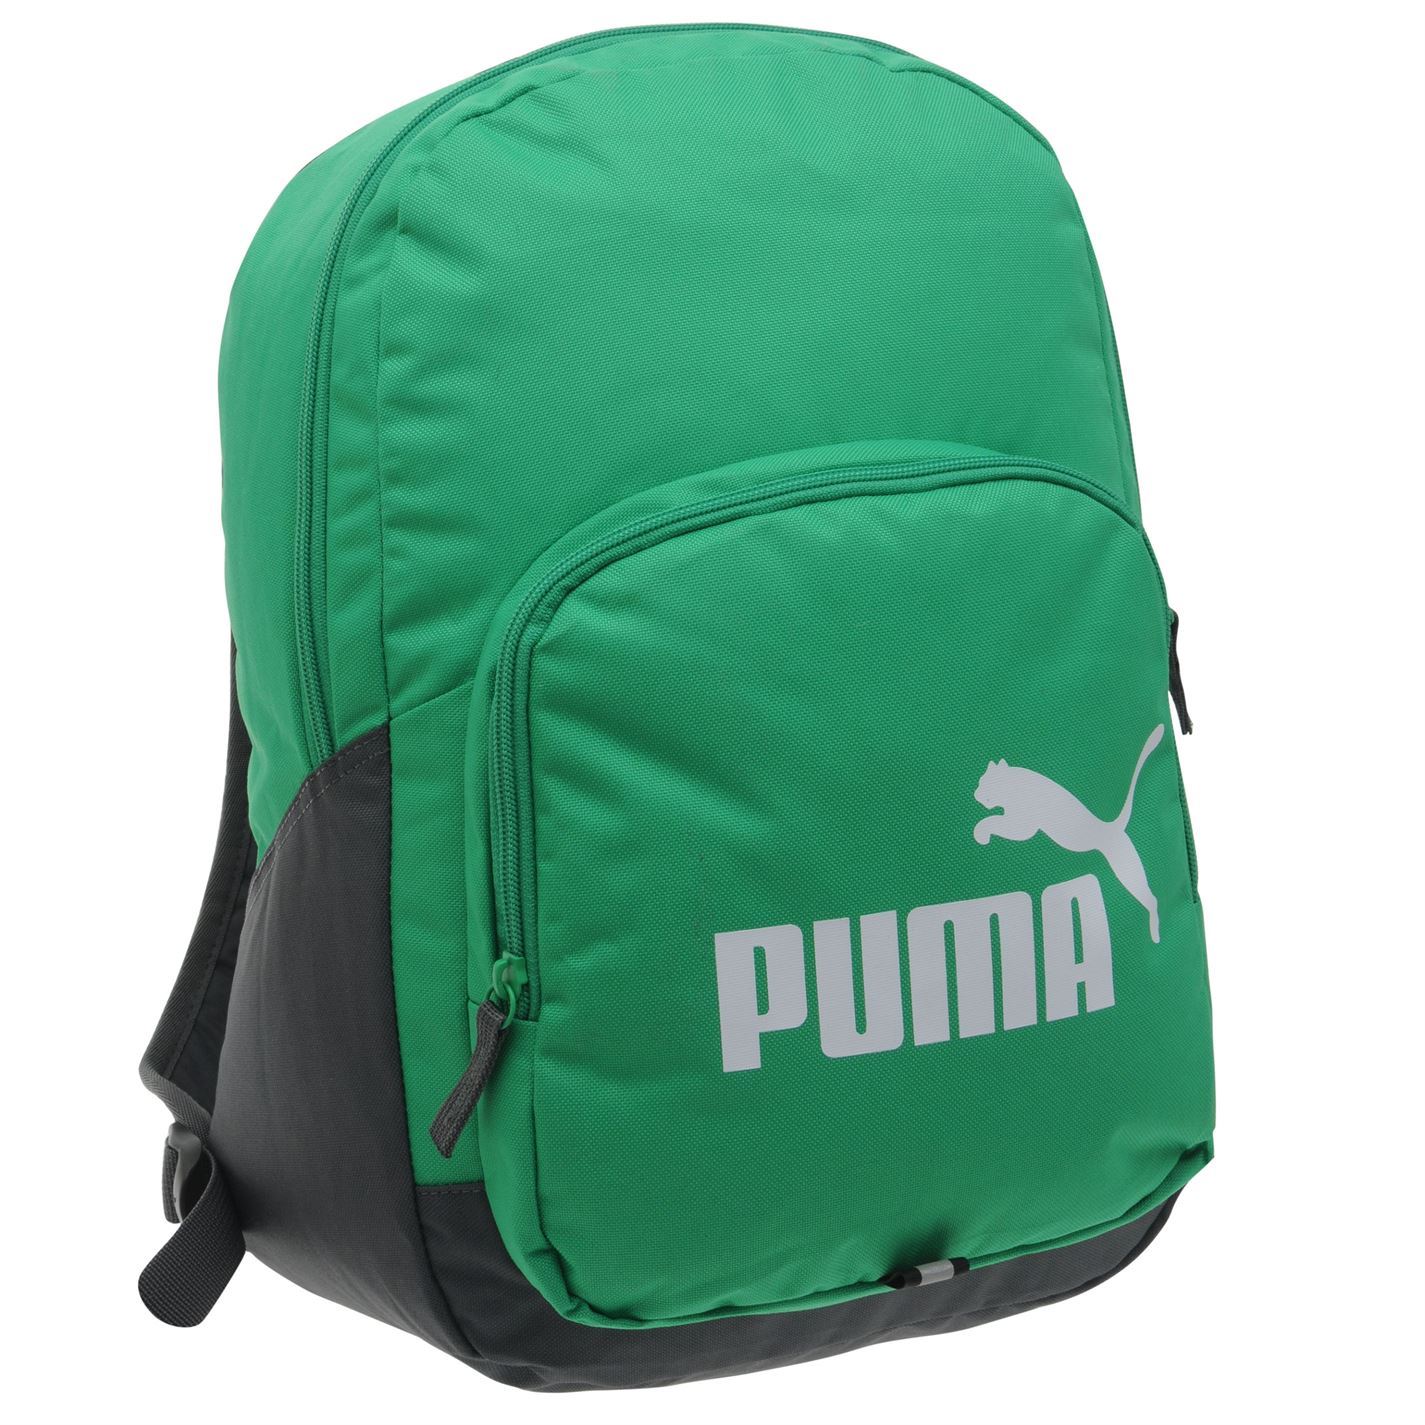 Puma Phase Backpack Green/White Bag Rucksack Holdall Carryall | eBay